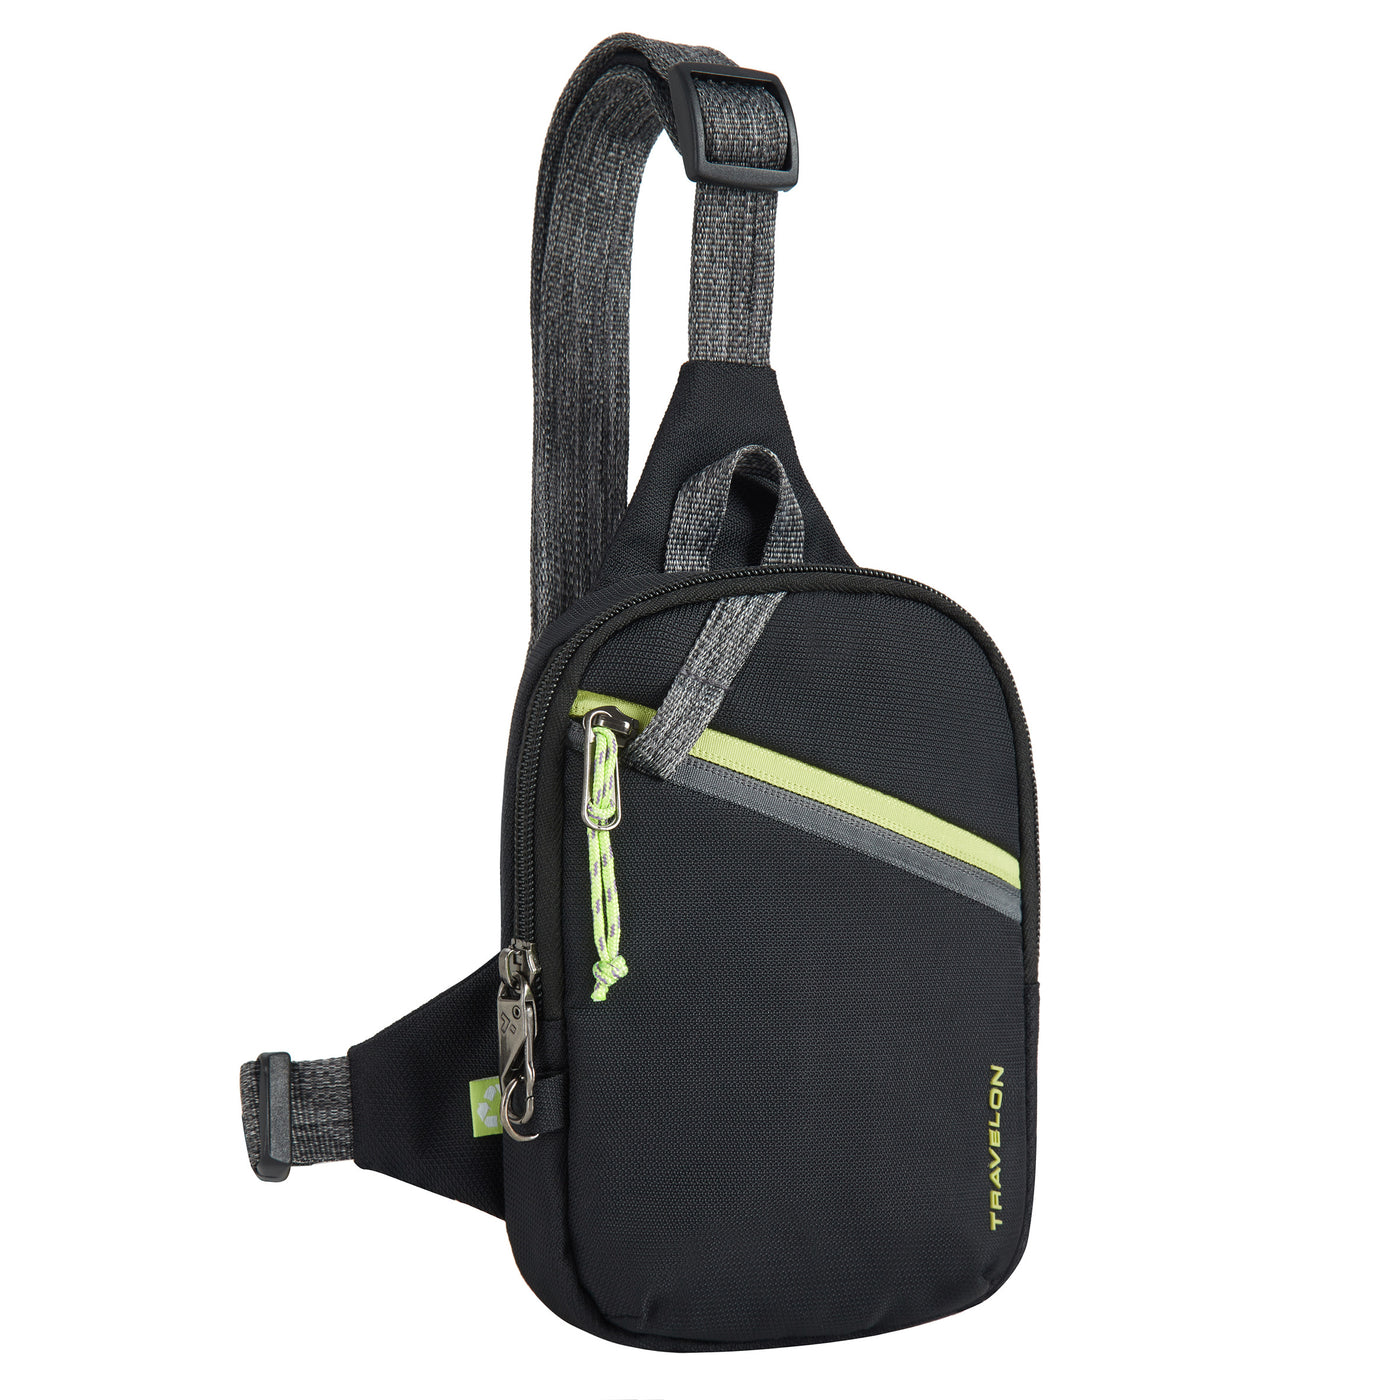  Travelon Add A Bag Strap, Black, One Size